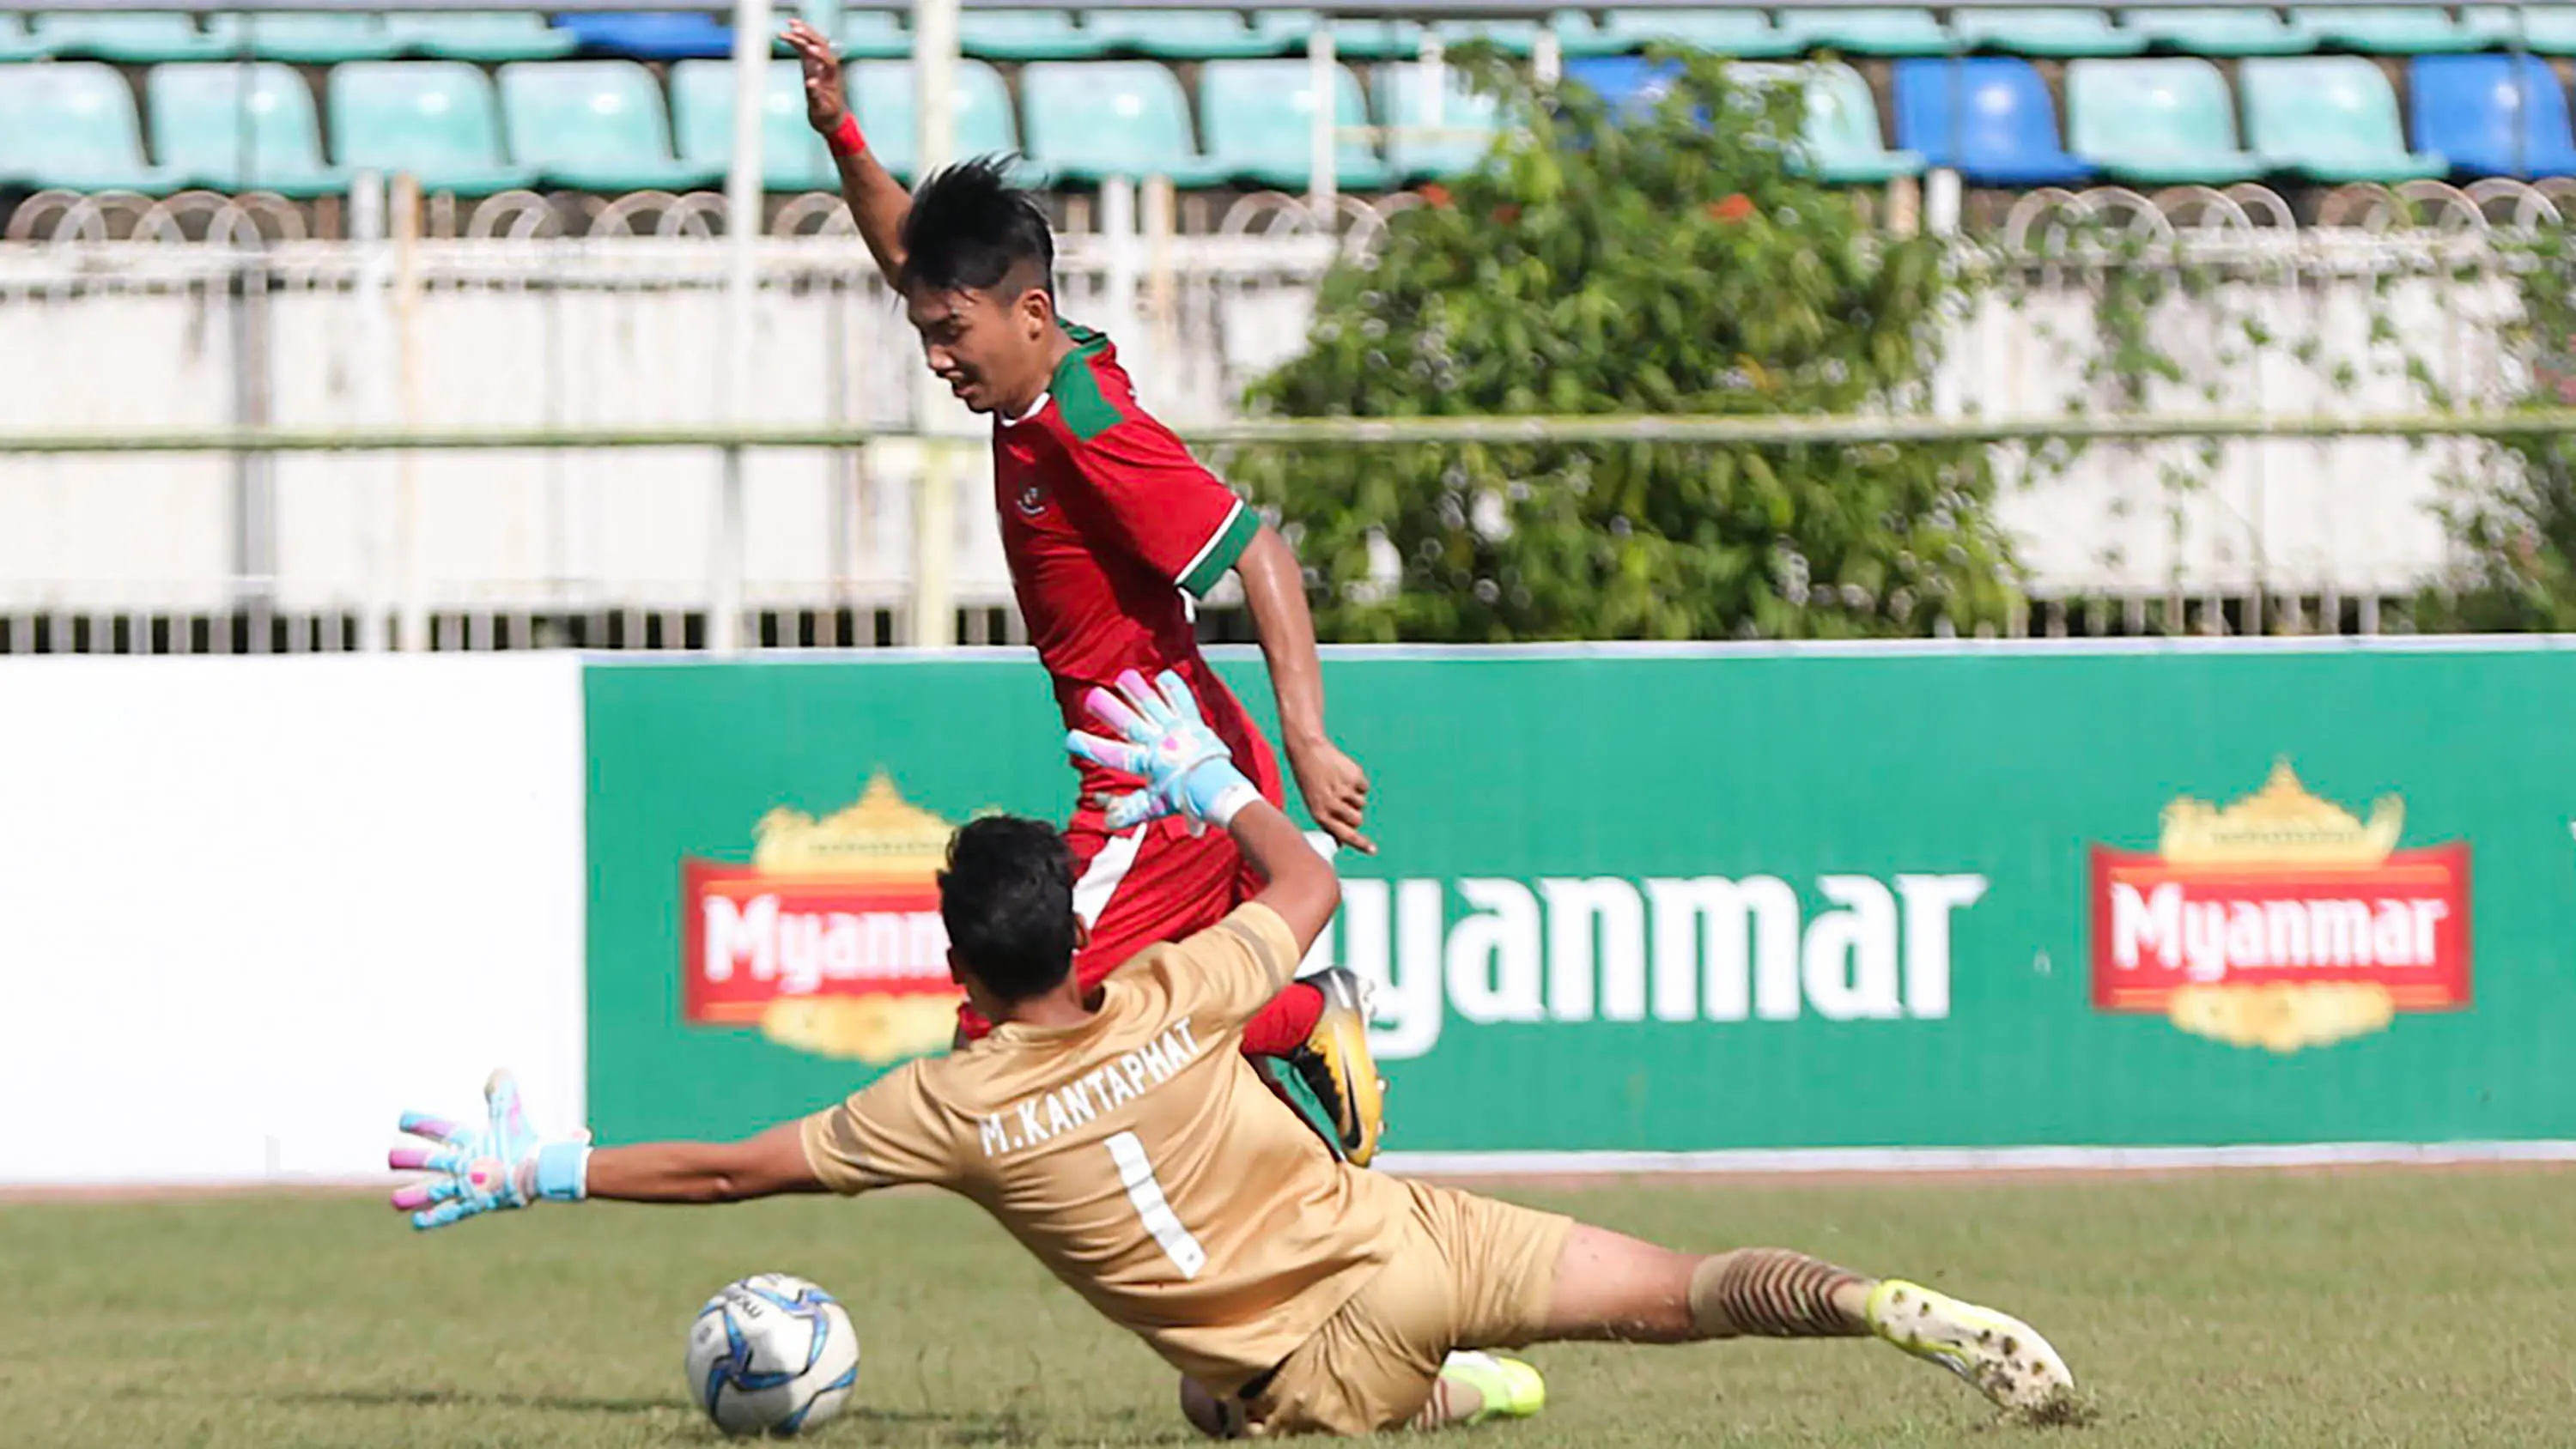  Gelandang Timnas Indonesia U-19, Witan Sulaiman, berusaha membobol gawang Thailand U-19 pada laga Piala AFF U-18 di Stadion Thuwanna, Yangon, Jumat (15/9/2017). (Liputan6.com/Yoppy Renato)